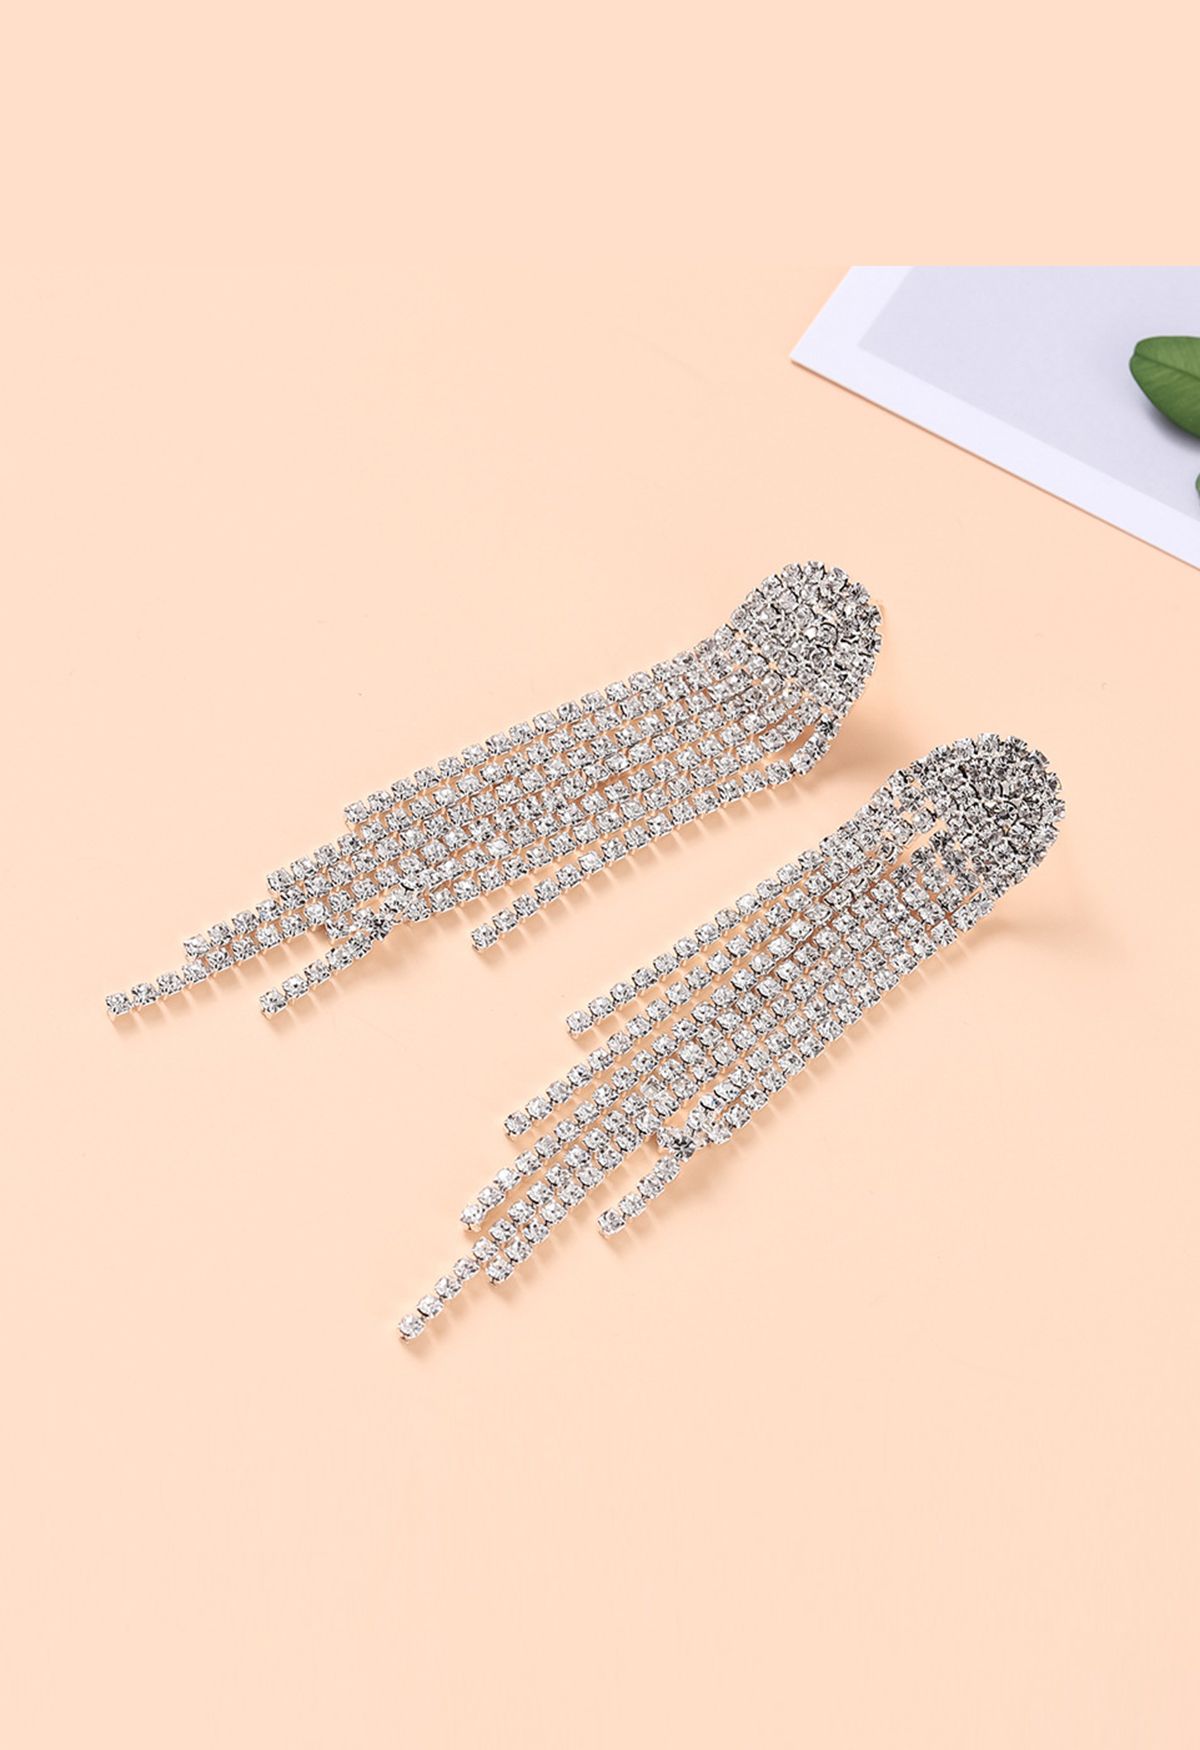 Simplicity Gleaming Diamond Tassel Drop Earrings